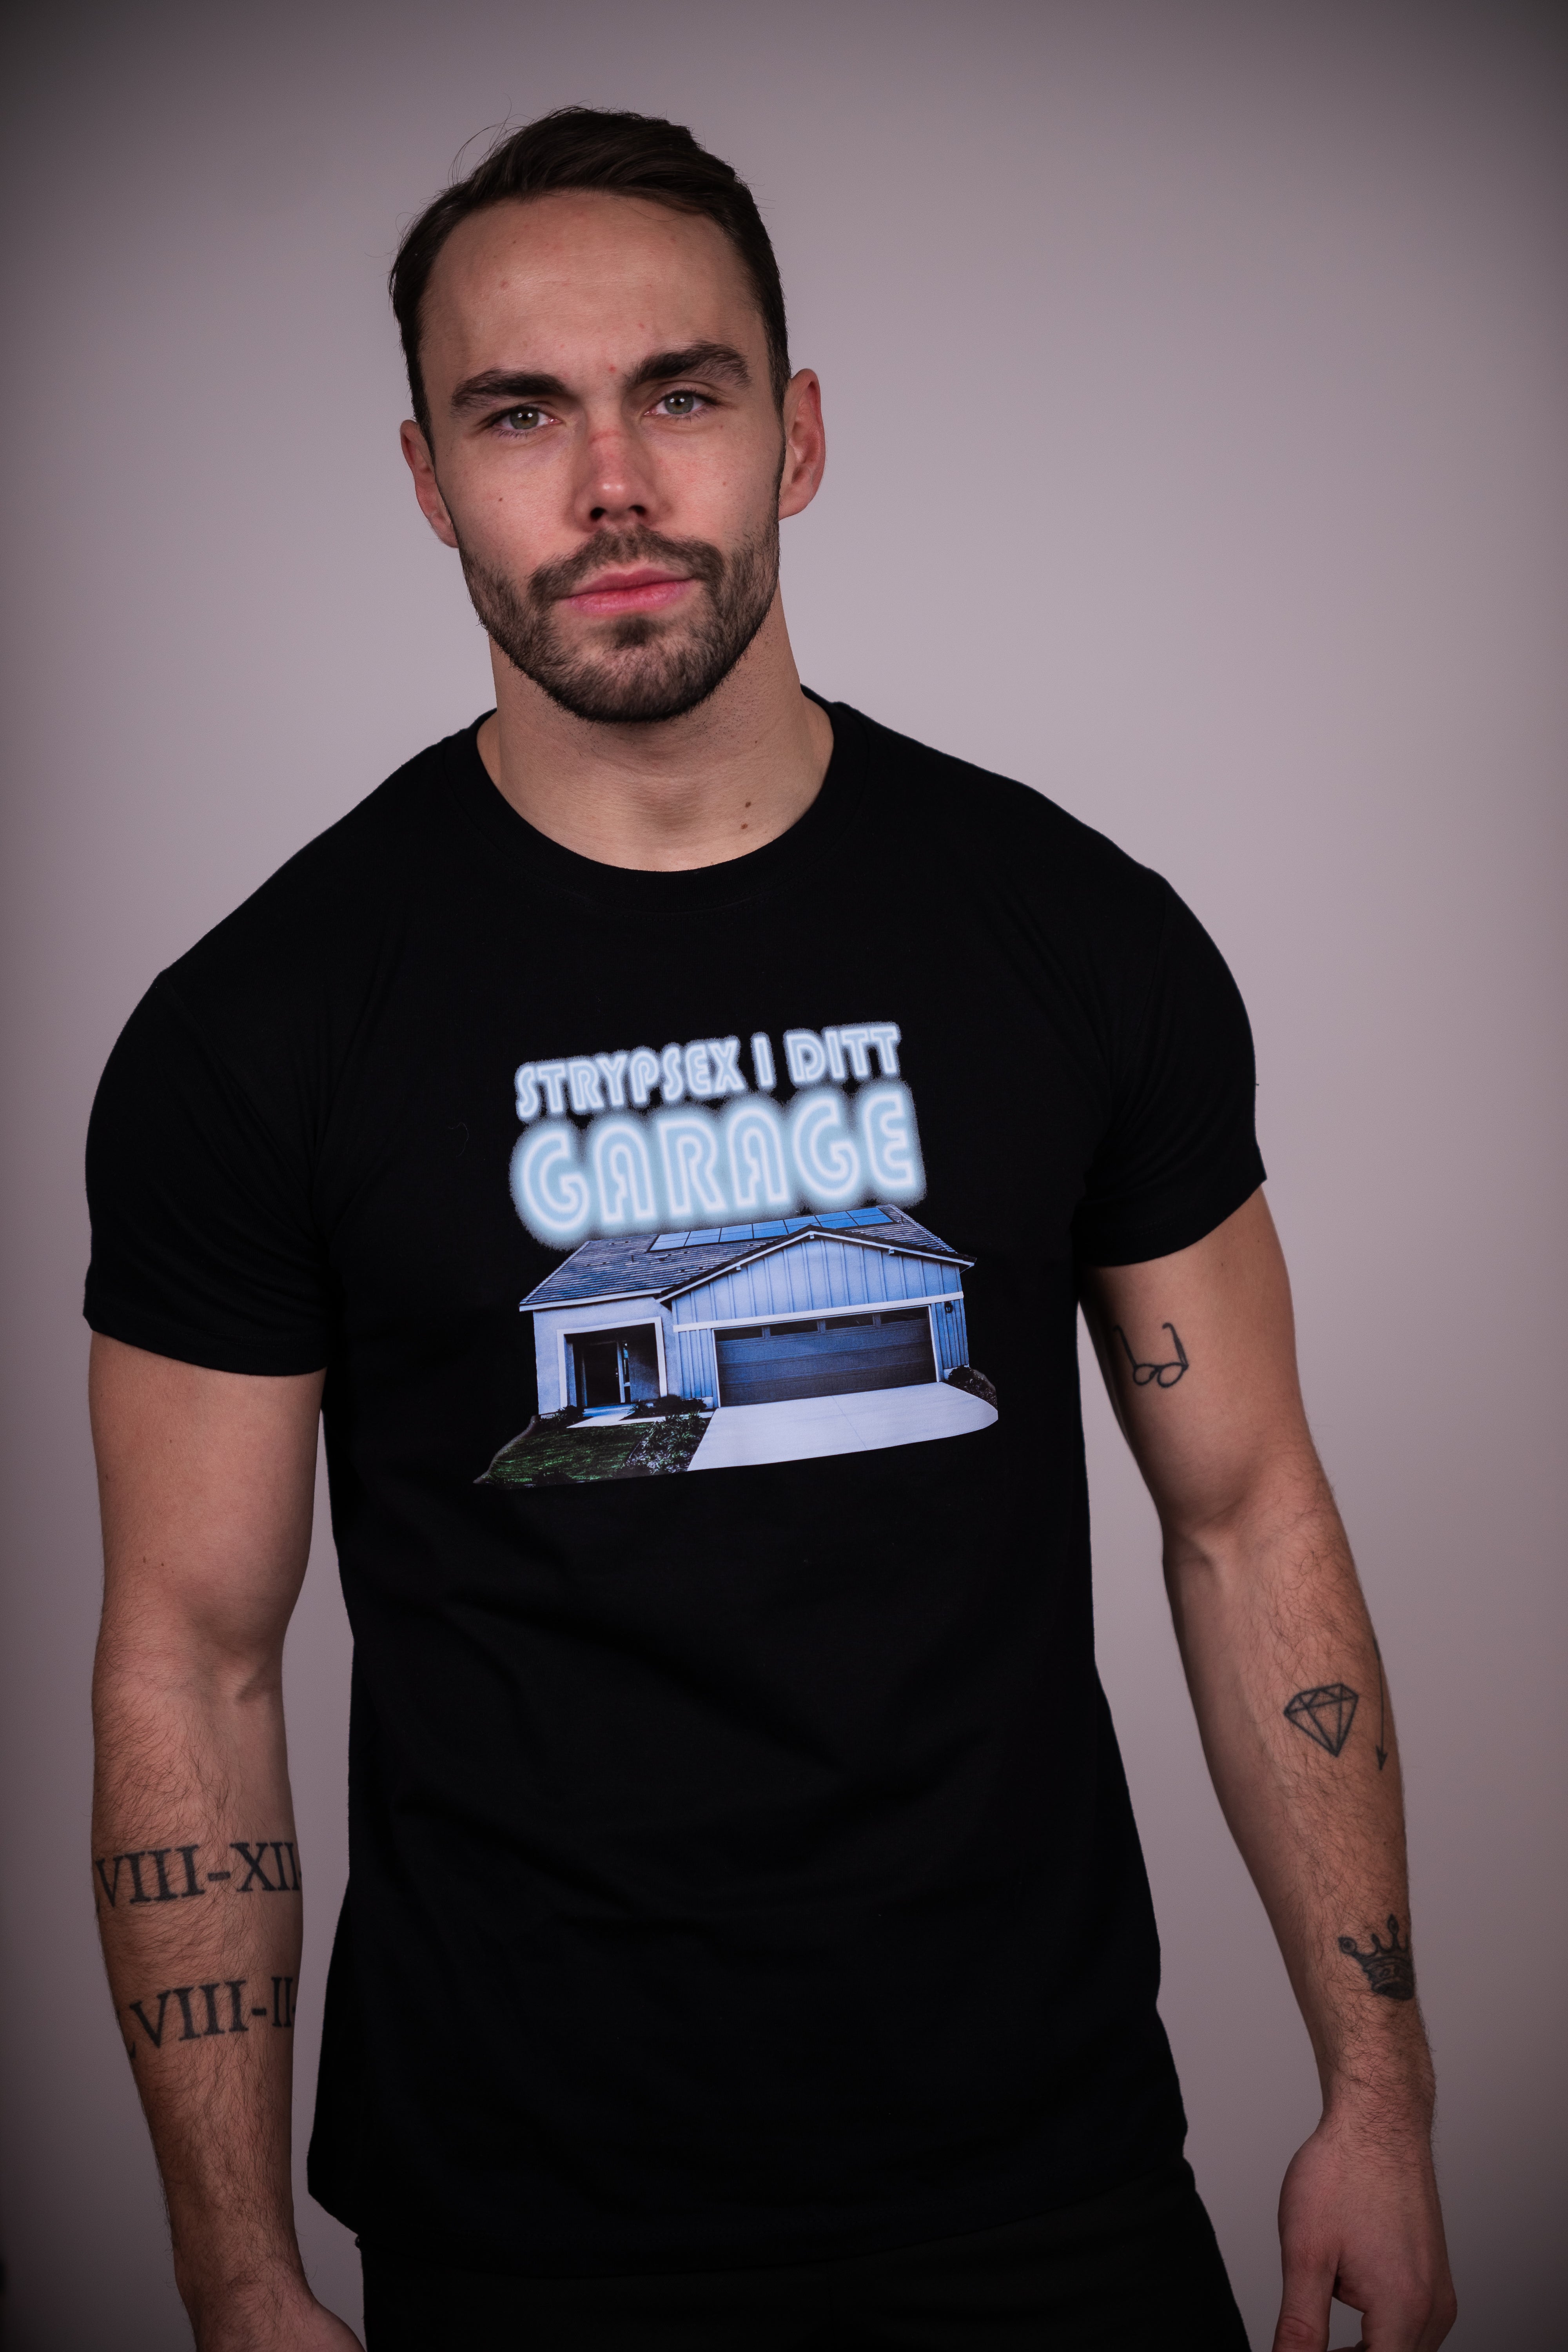 Strypsex i ditt garage T-shirt - Unisex